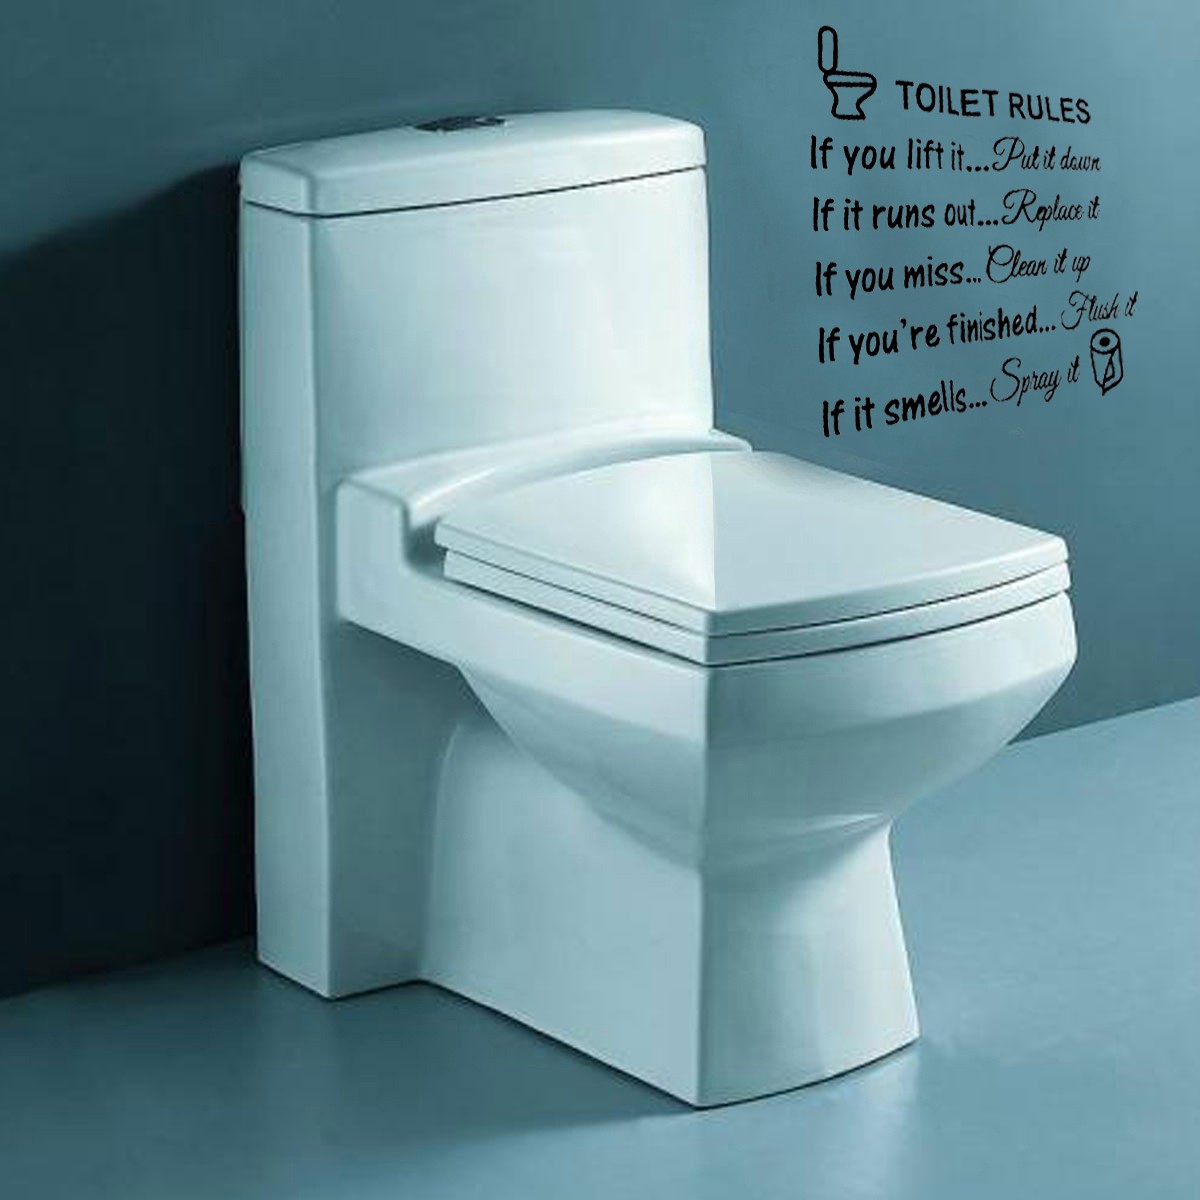 DIY-Toilet-Rules-Bathroom-Toilet-Wall-Sticker-Vinyl-Art-Decals-Home-Office-Decoration-1722046-8